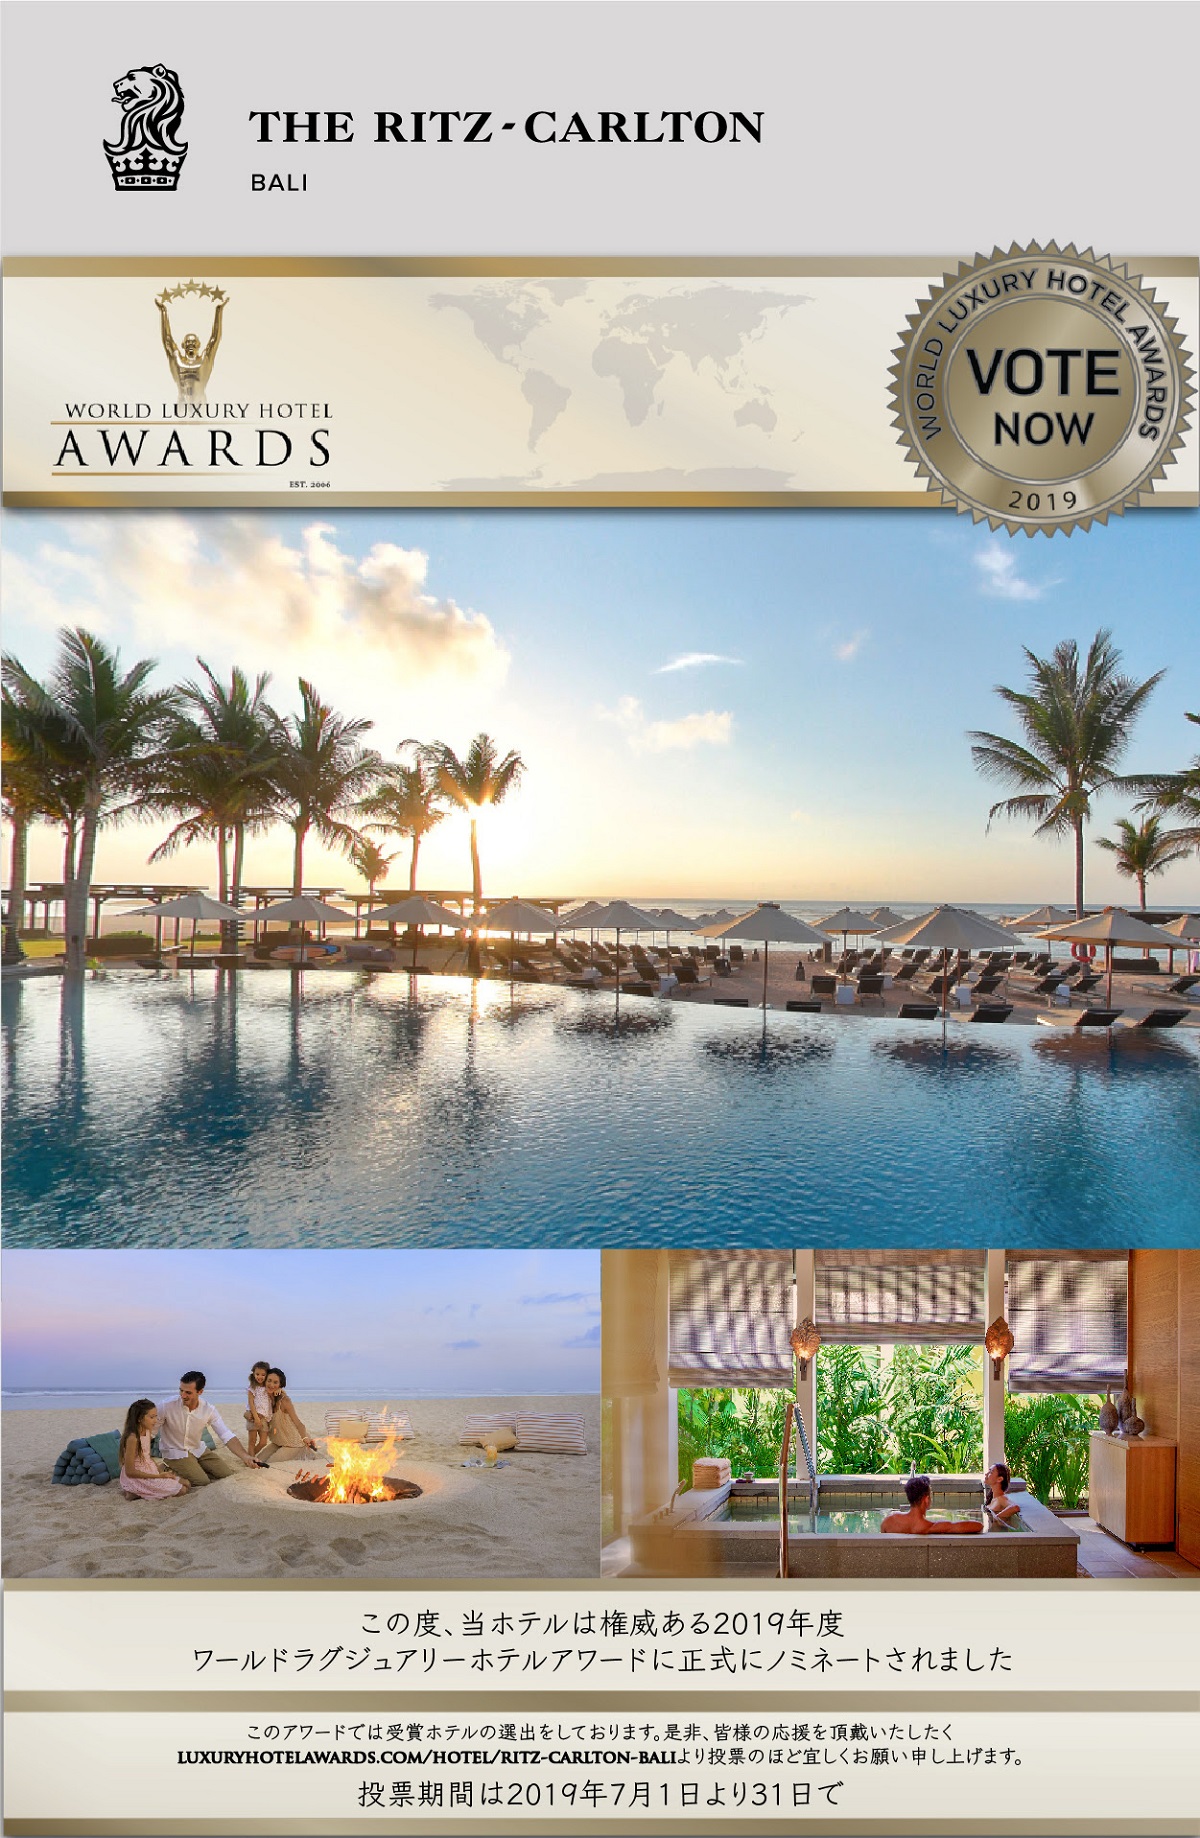 The Ritz-Carlton, Bali for World Luxury Hotel Awards 2019@C[W